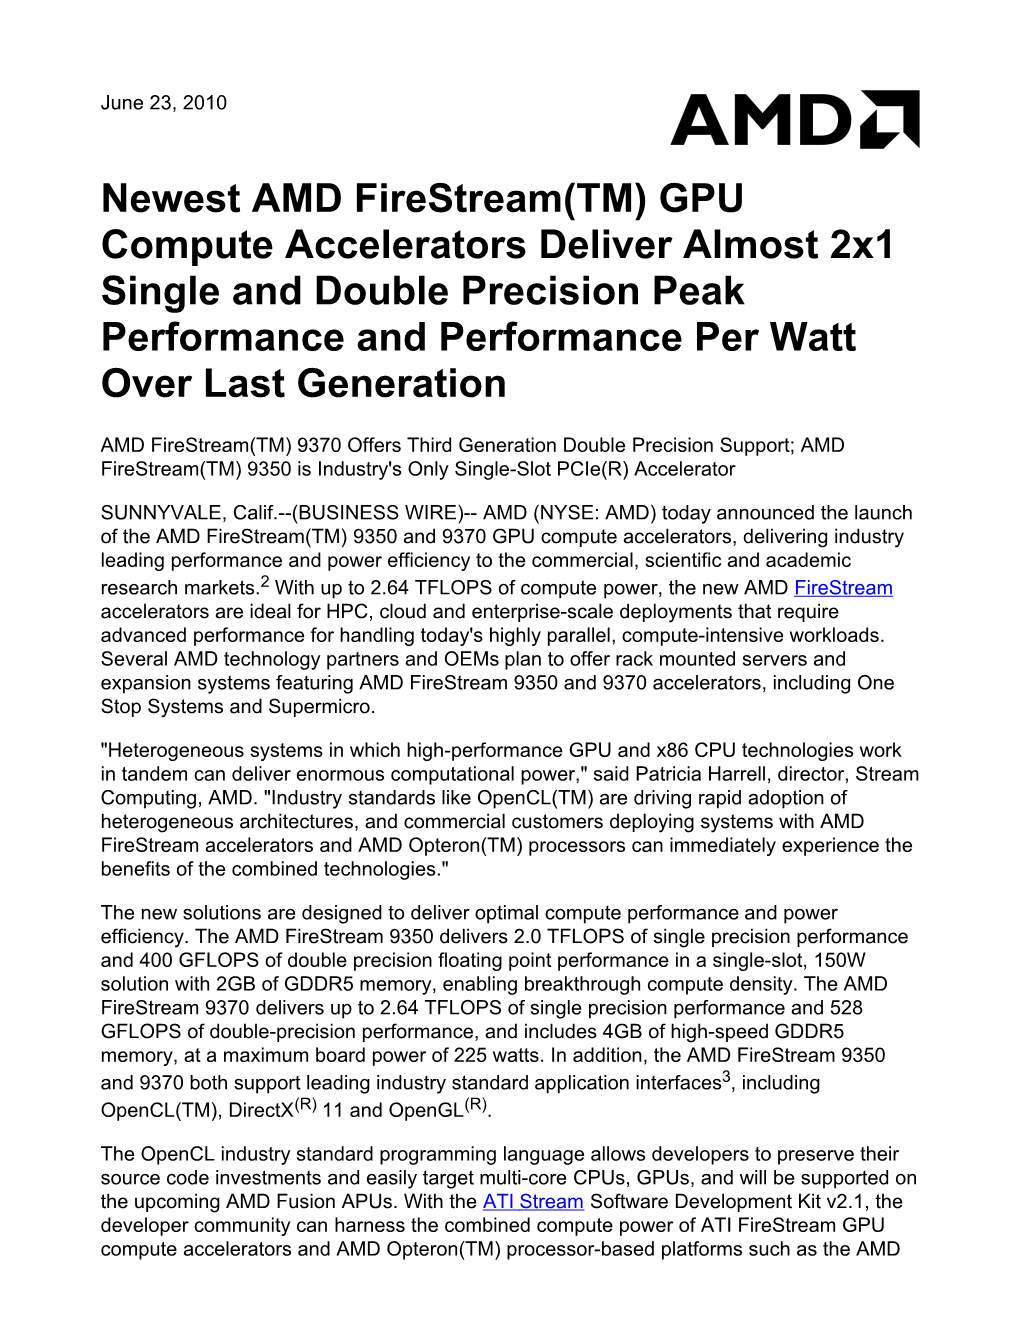 Newest AMD Firestream(TM) GPU Compute Accelerators Deliver Almost 2X1 Single and Double Precision Peak Performance and Performance Per Watt Over Last Generation